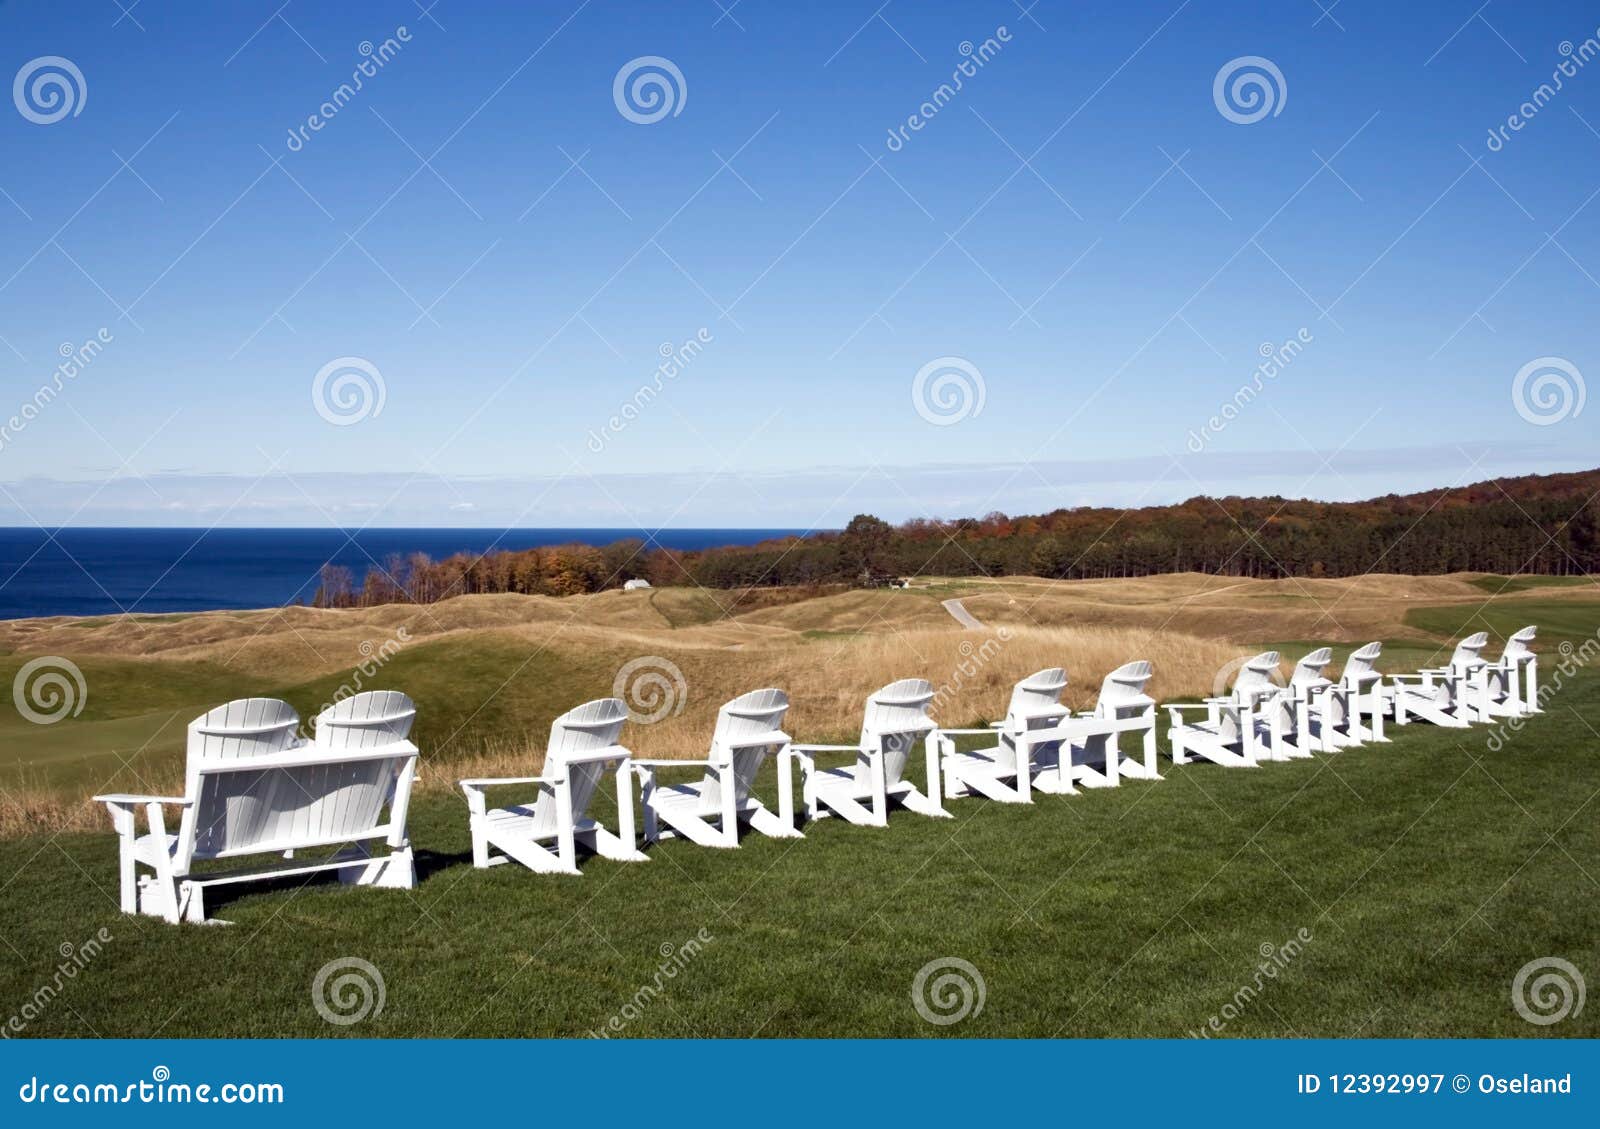 ... Free Stock Photography: Adirondack chairs on Michigan golf course